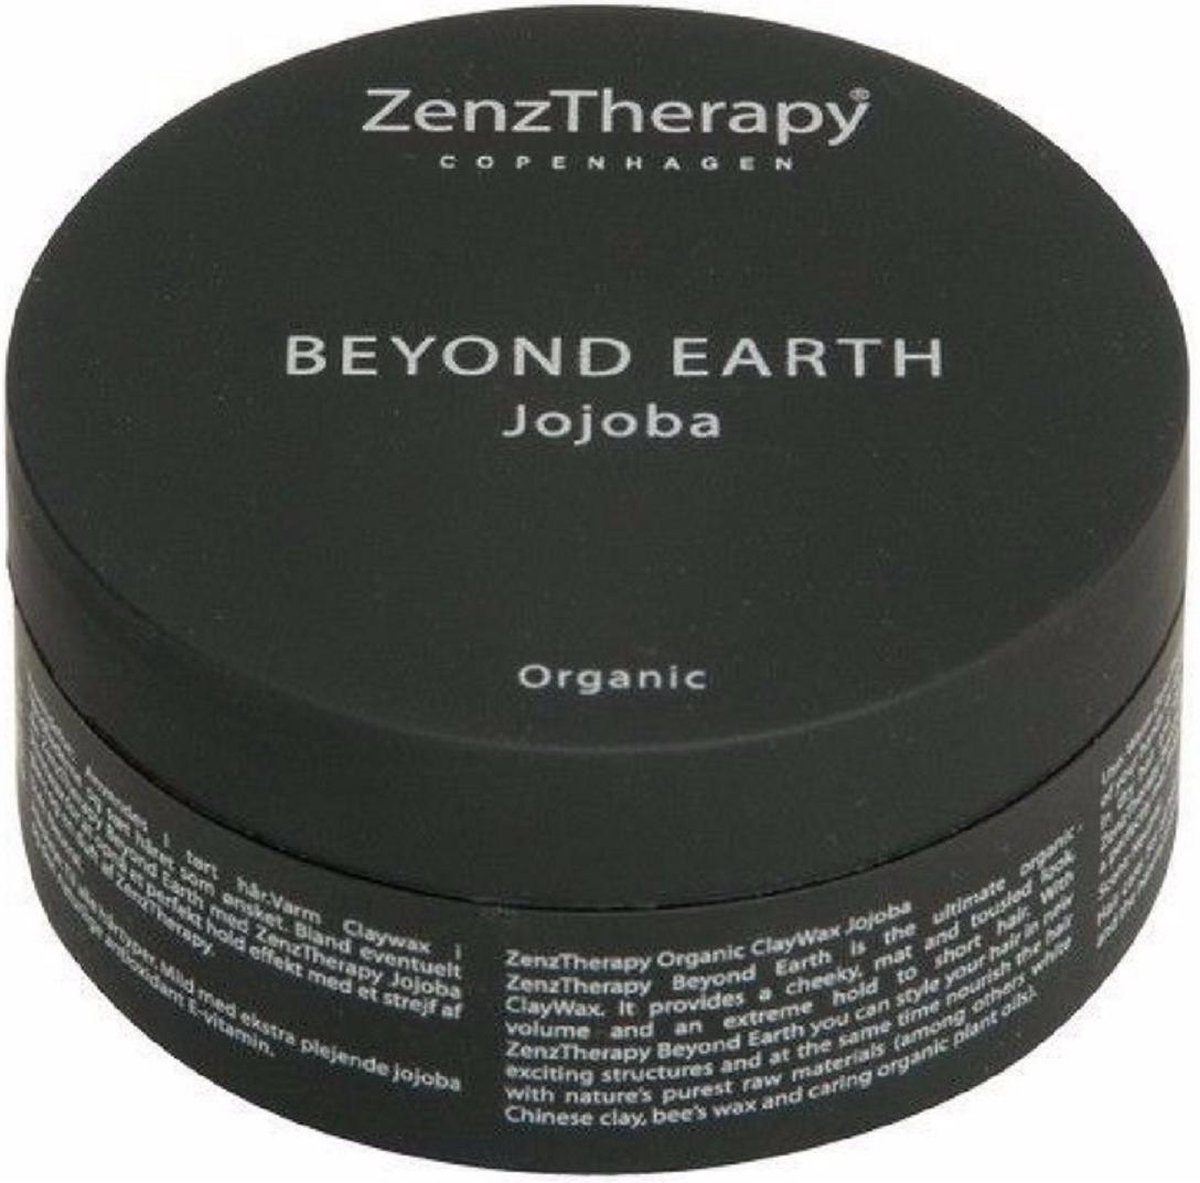 Zenz Therapy Beyond Earth Jojoba Claywax 75 ml.